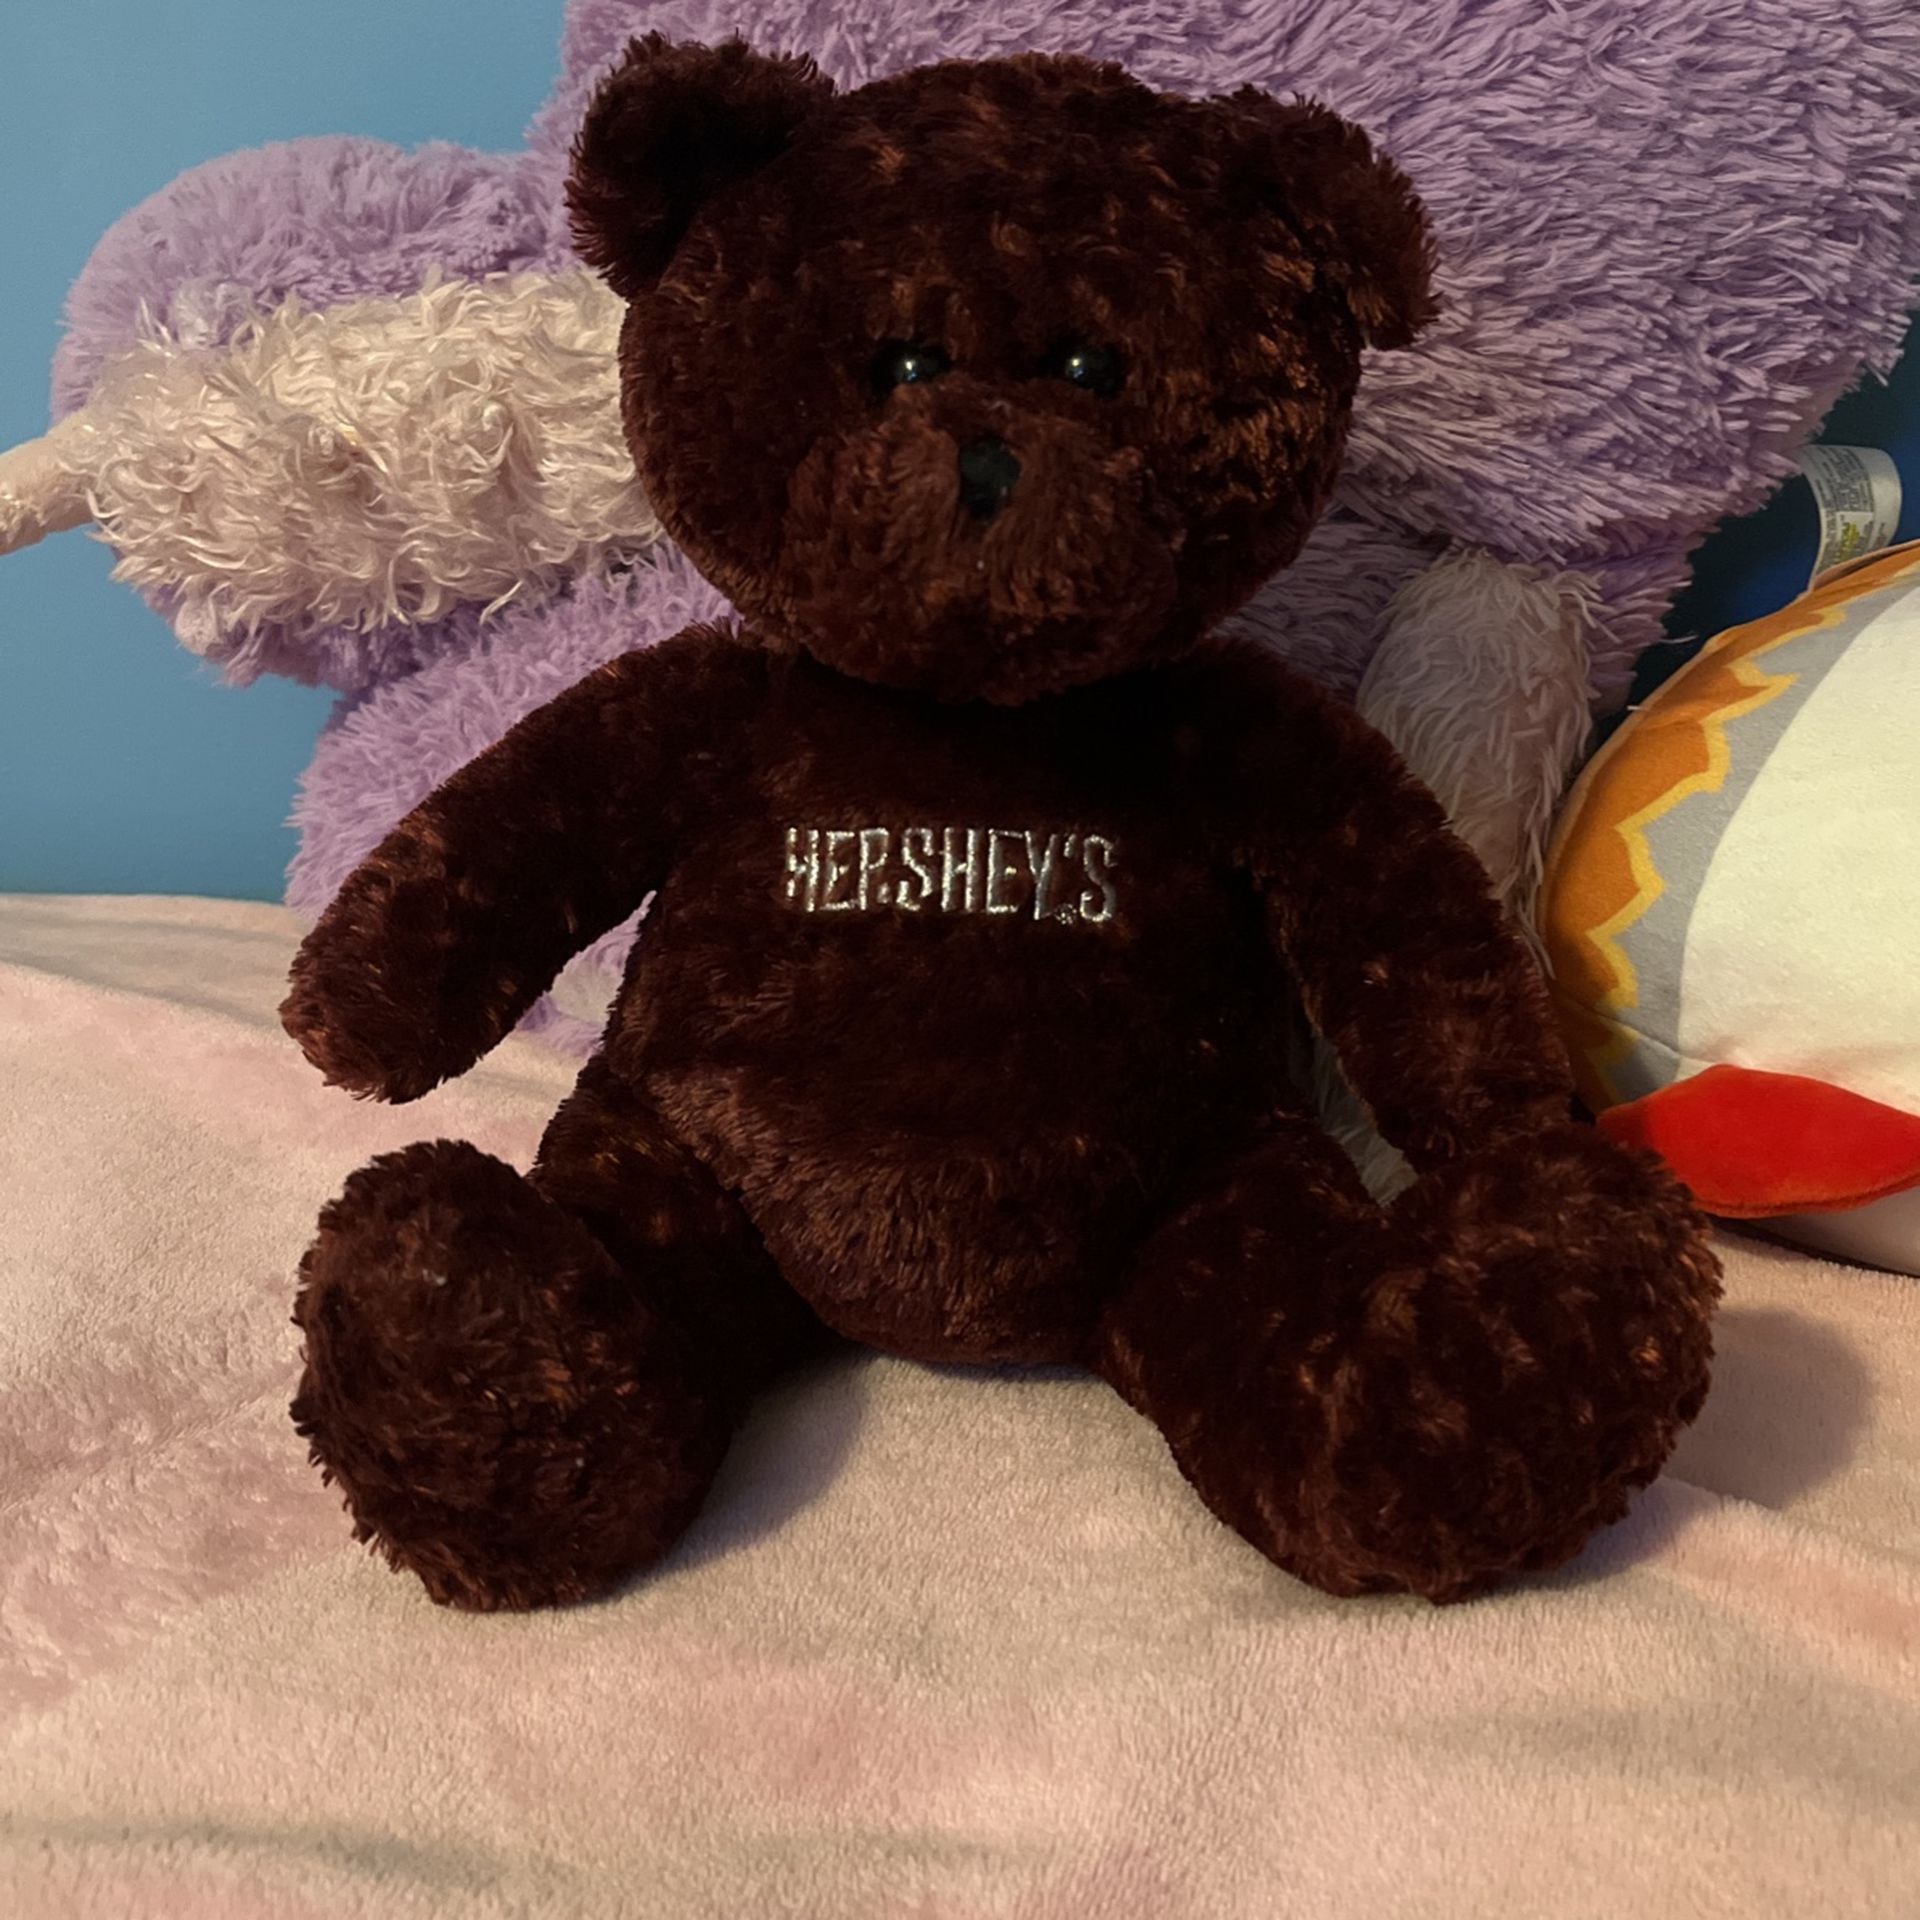 Hershey’s teddy bear